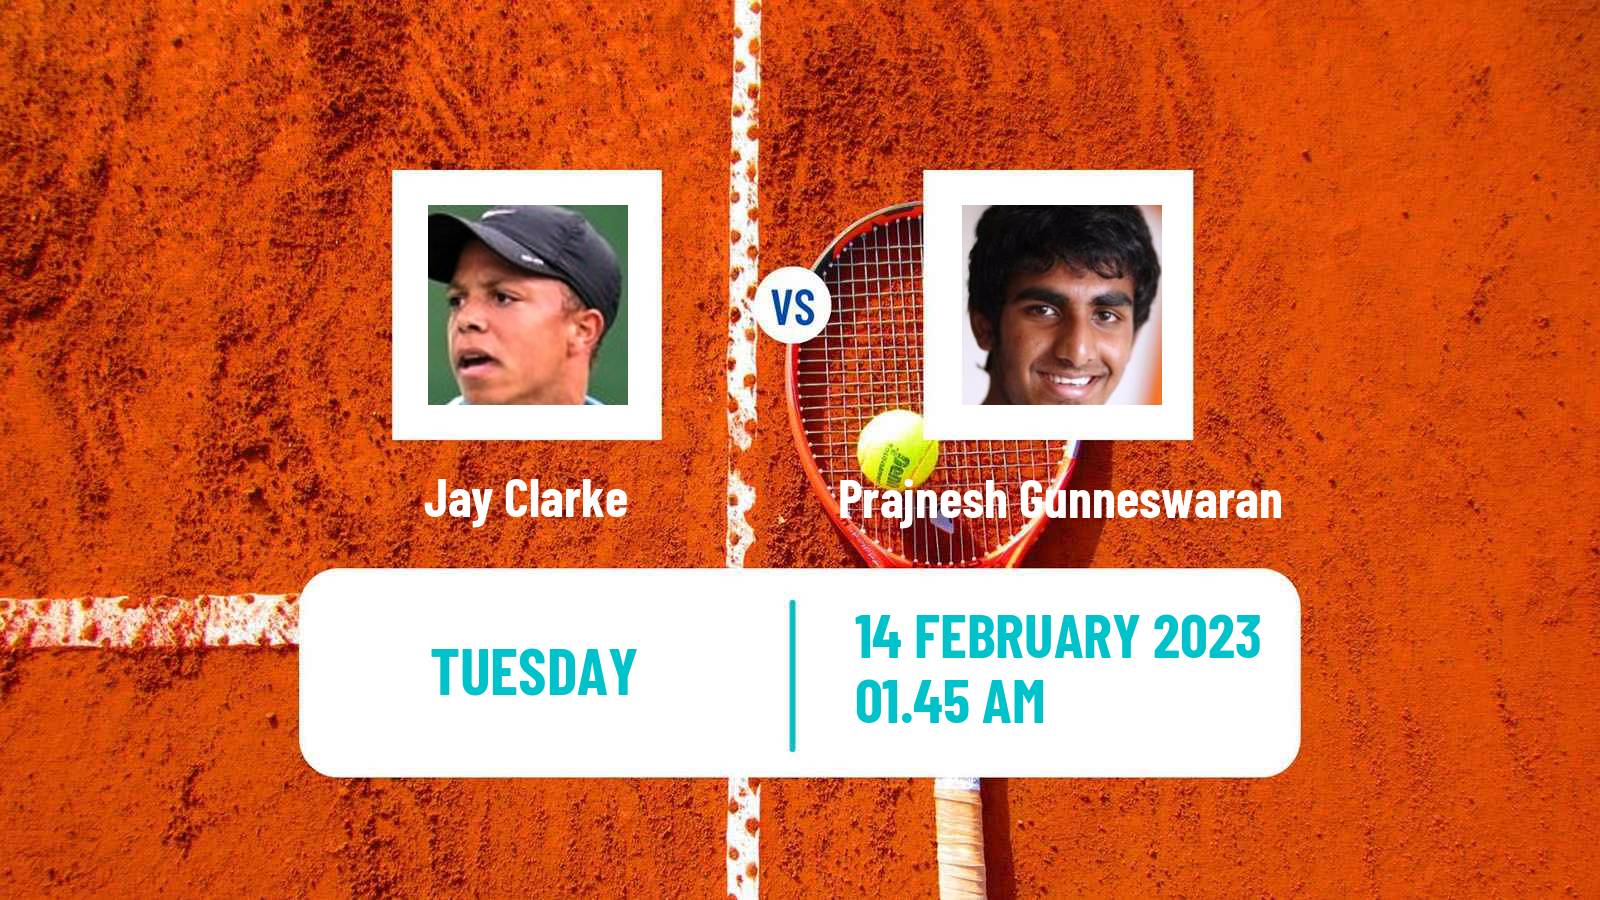 Tennis ATP Challenger Jay Clarke - Prajnesh Gunneswaran